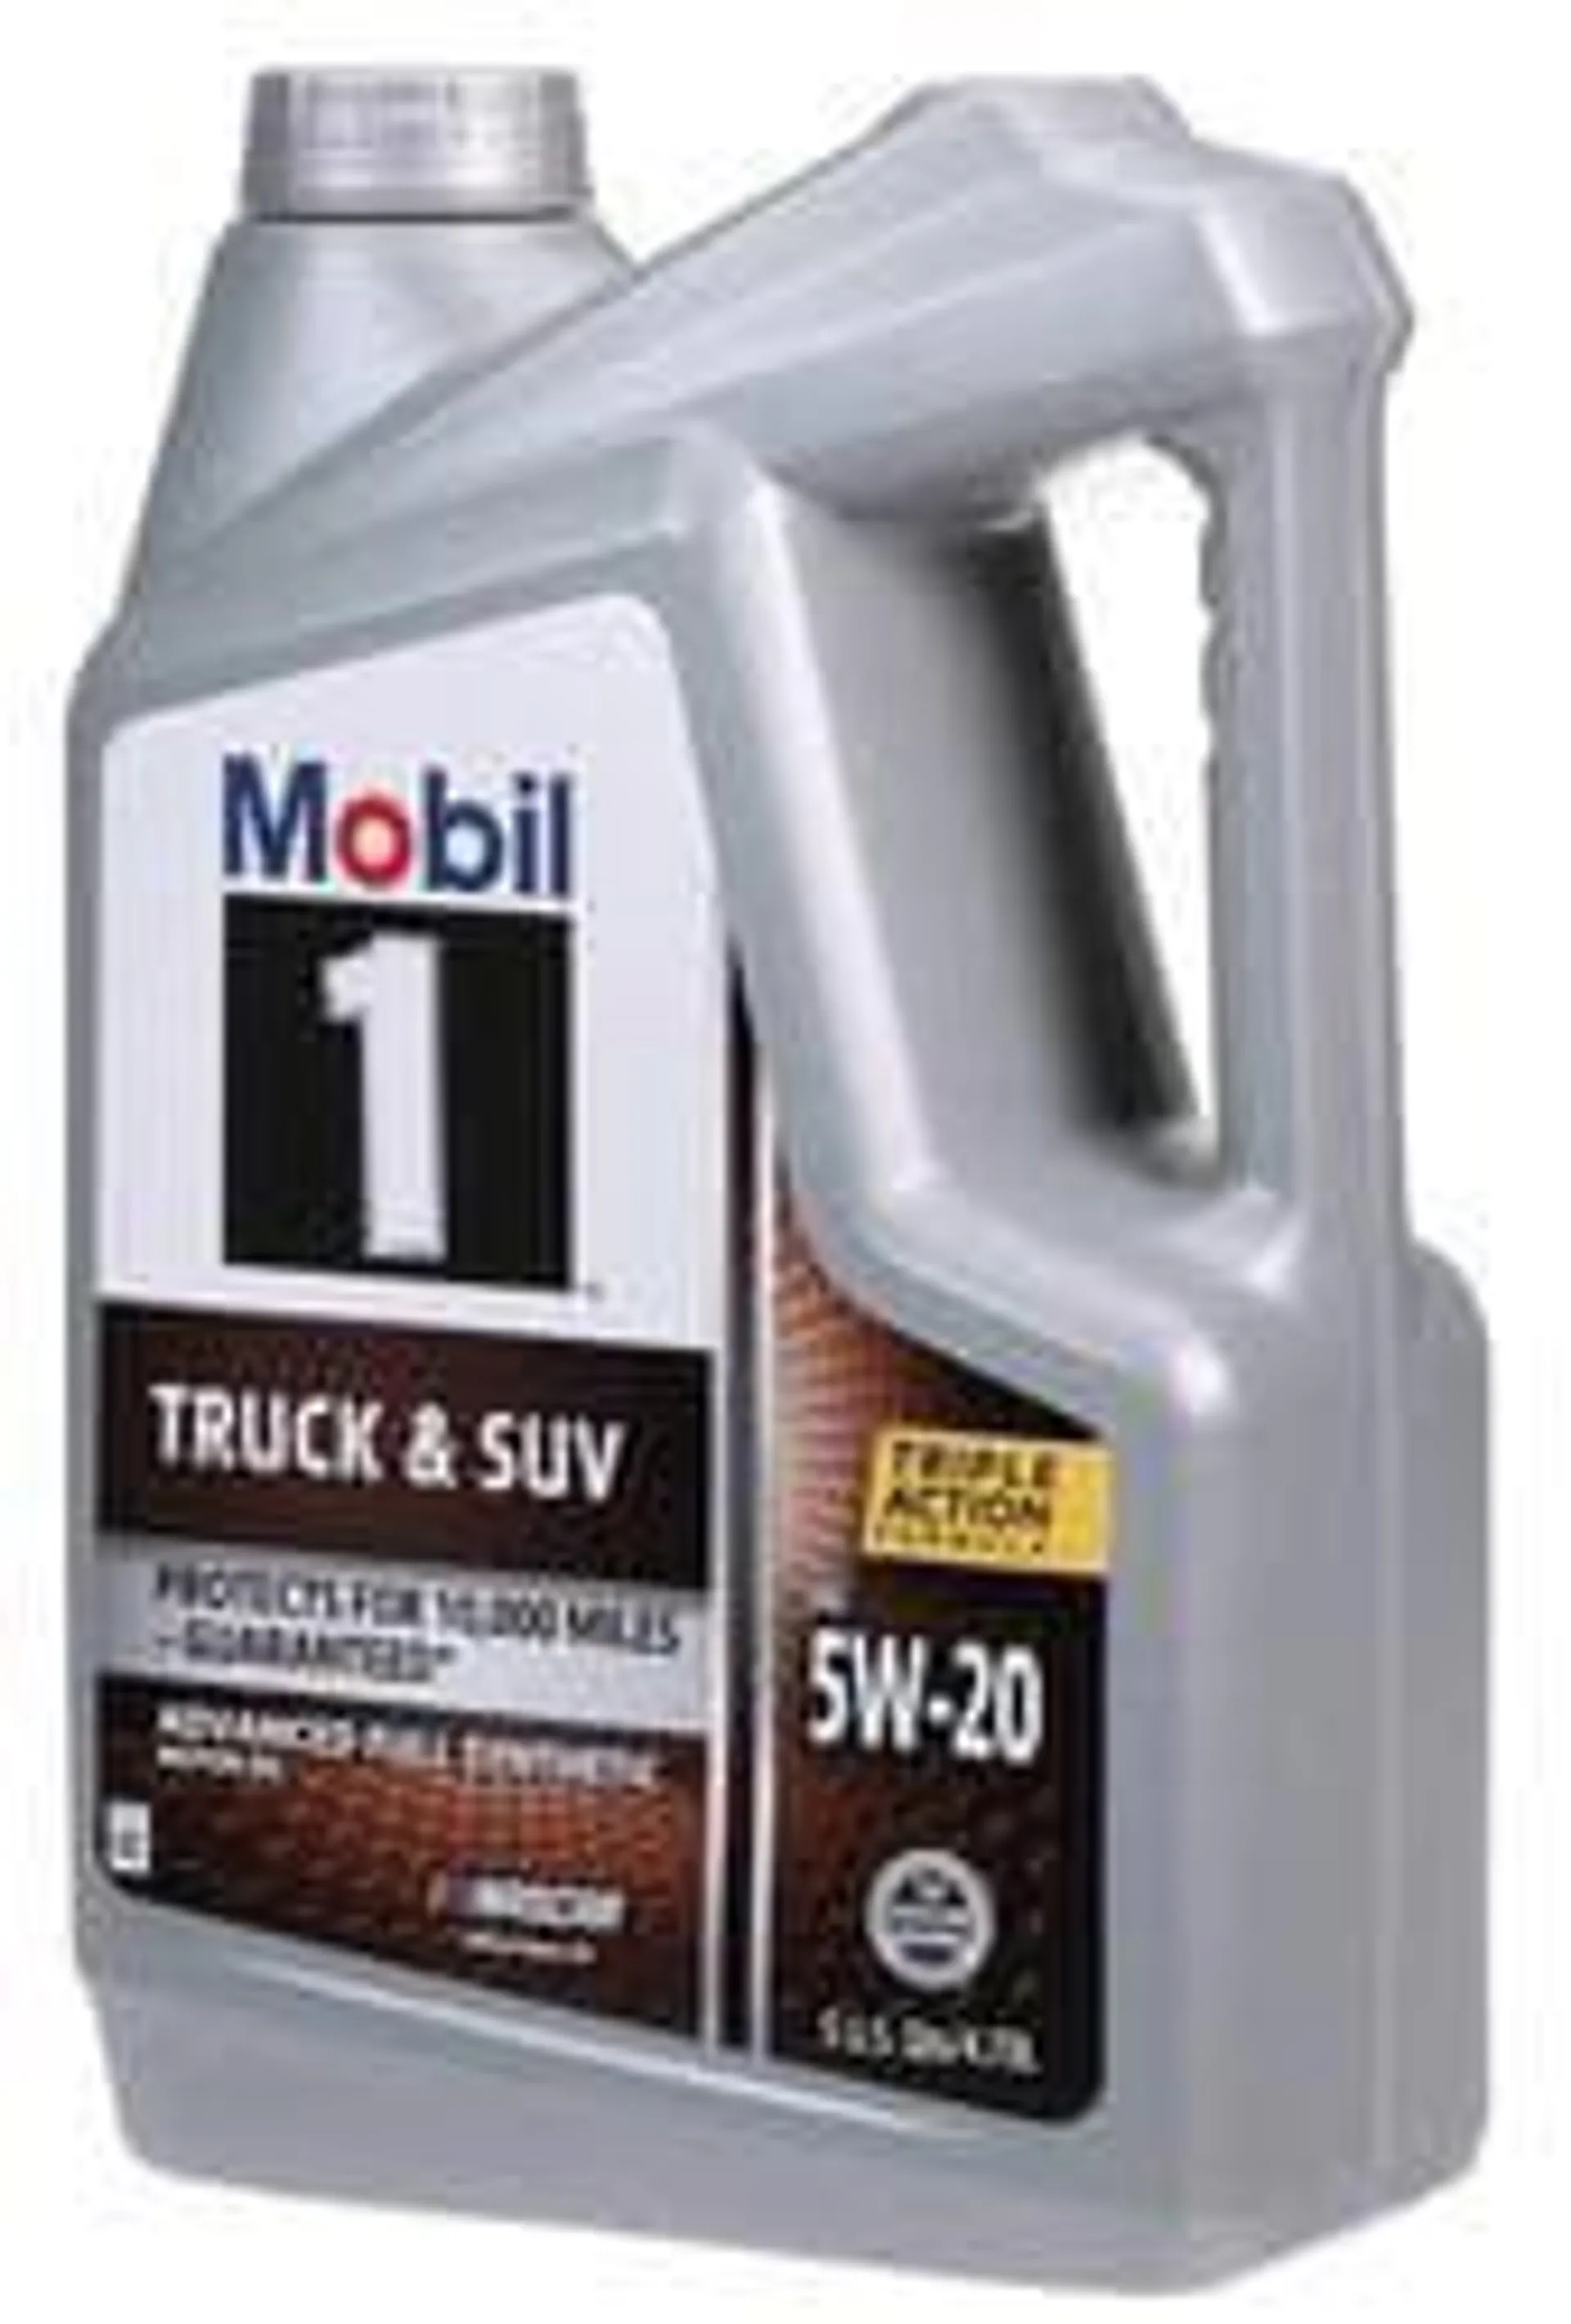 Mobil 1 Truck & SUV Full Synthetic Motor Oil 5W-20 5 Quart - 1-5-20SUV-5QT